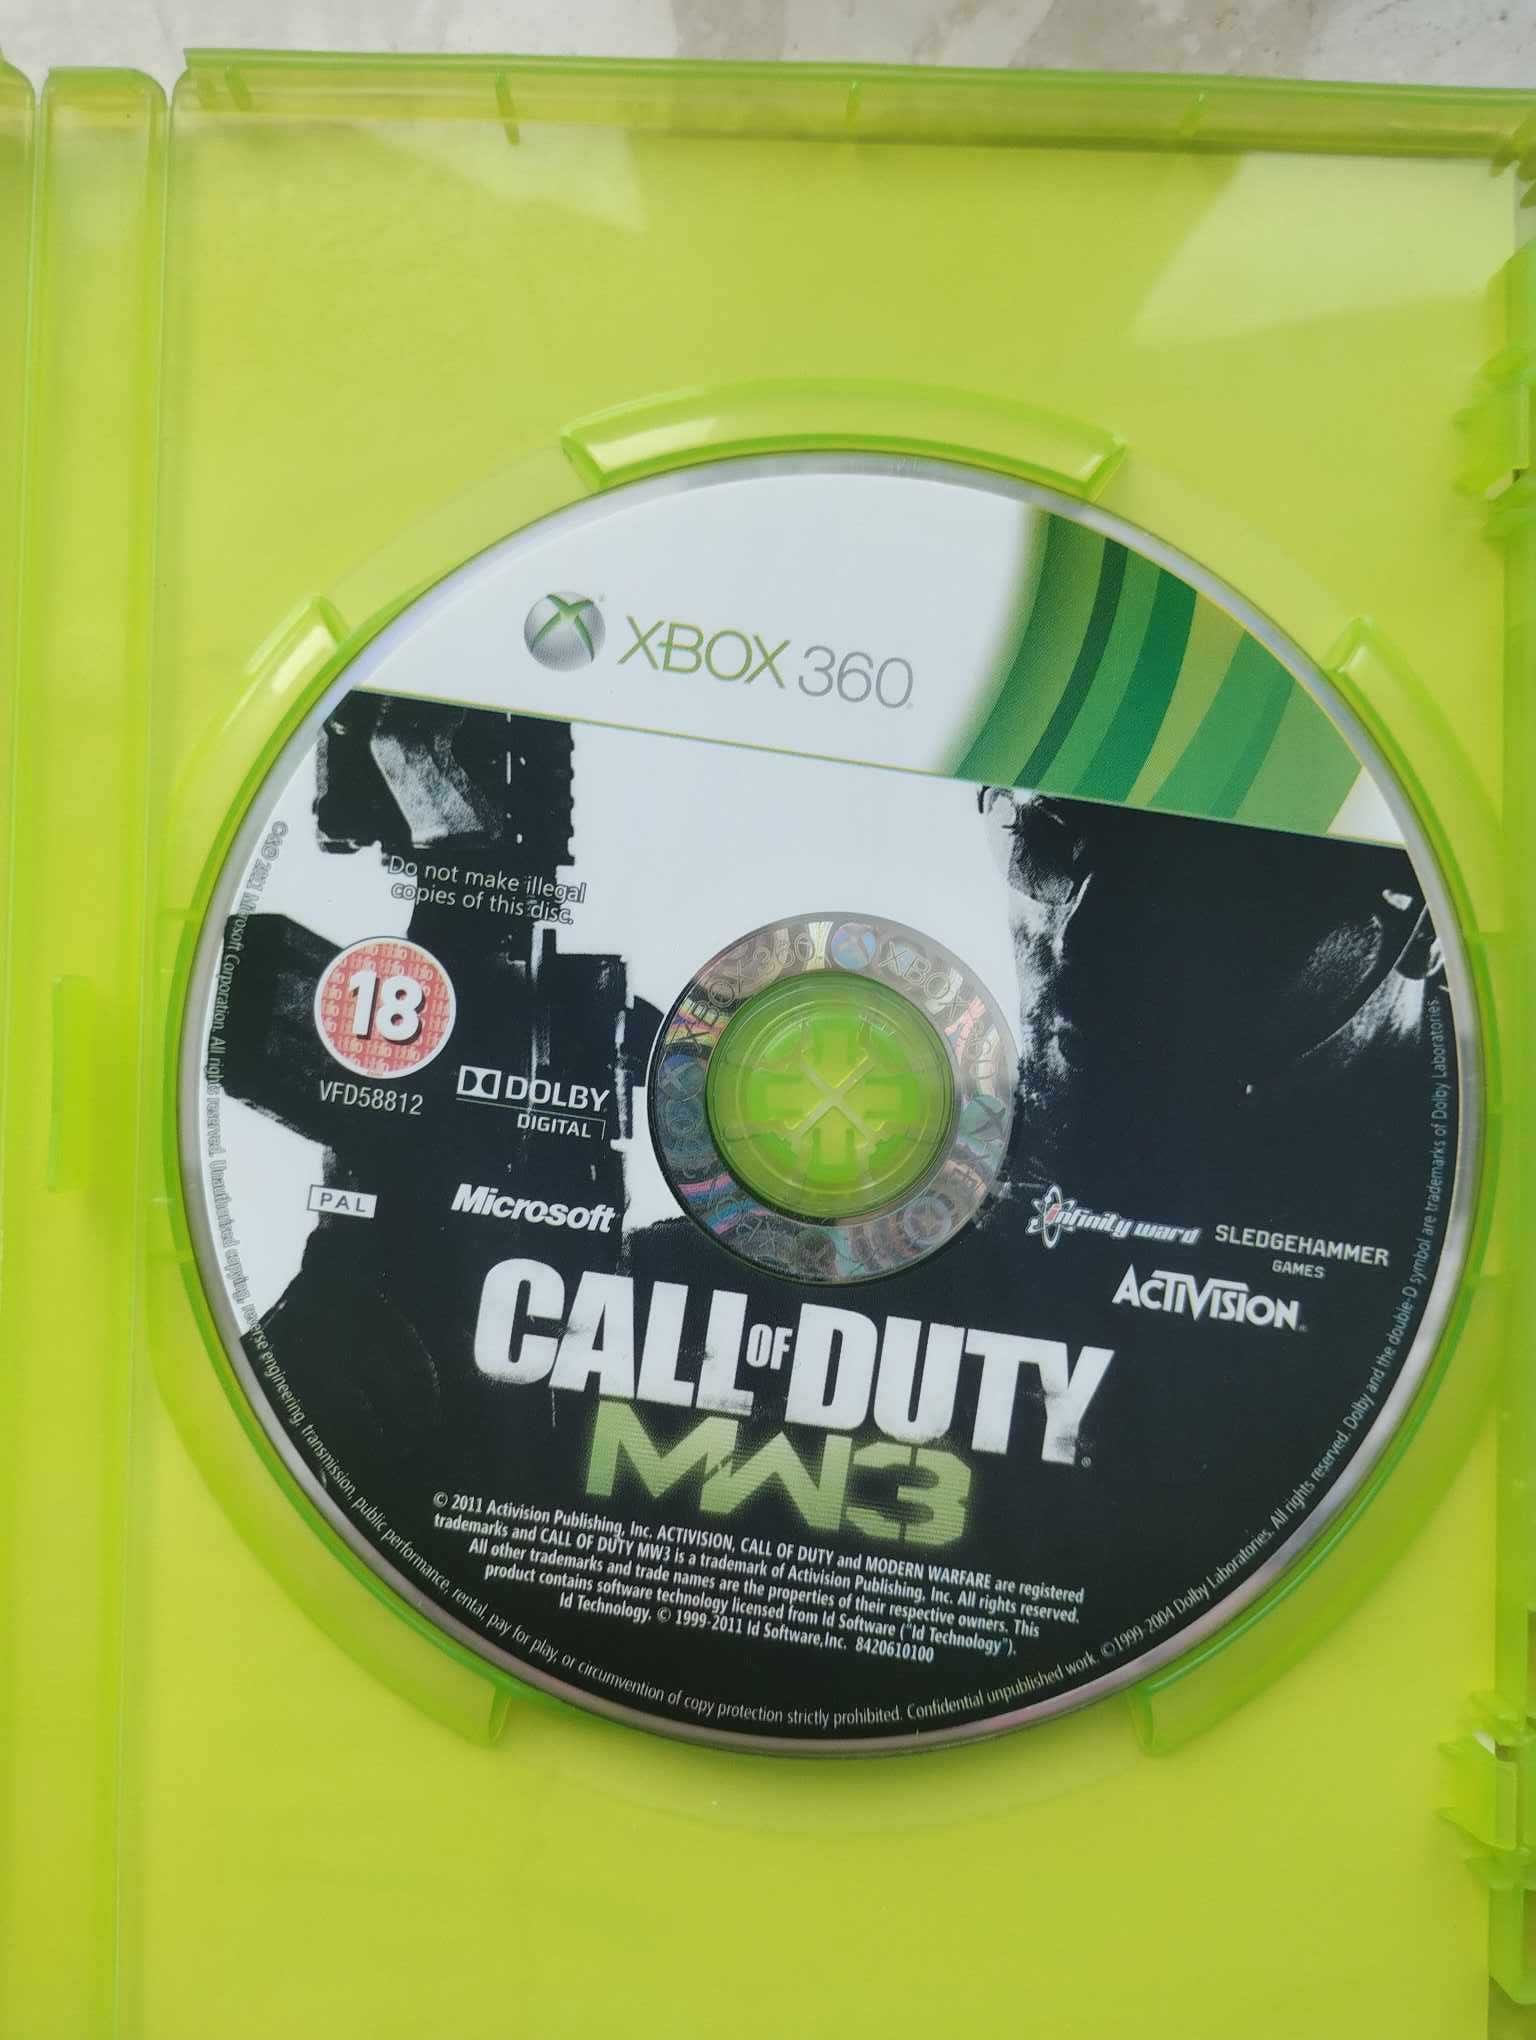 Call of duty: Modern Warfare 3 xbox 360